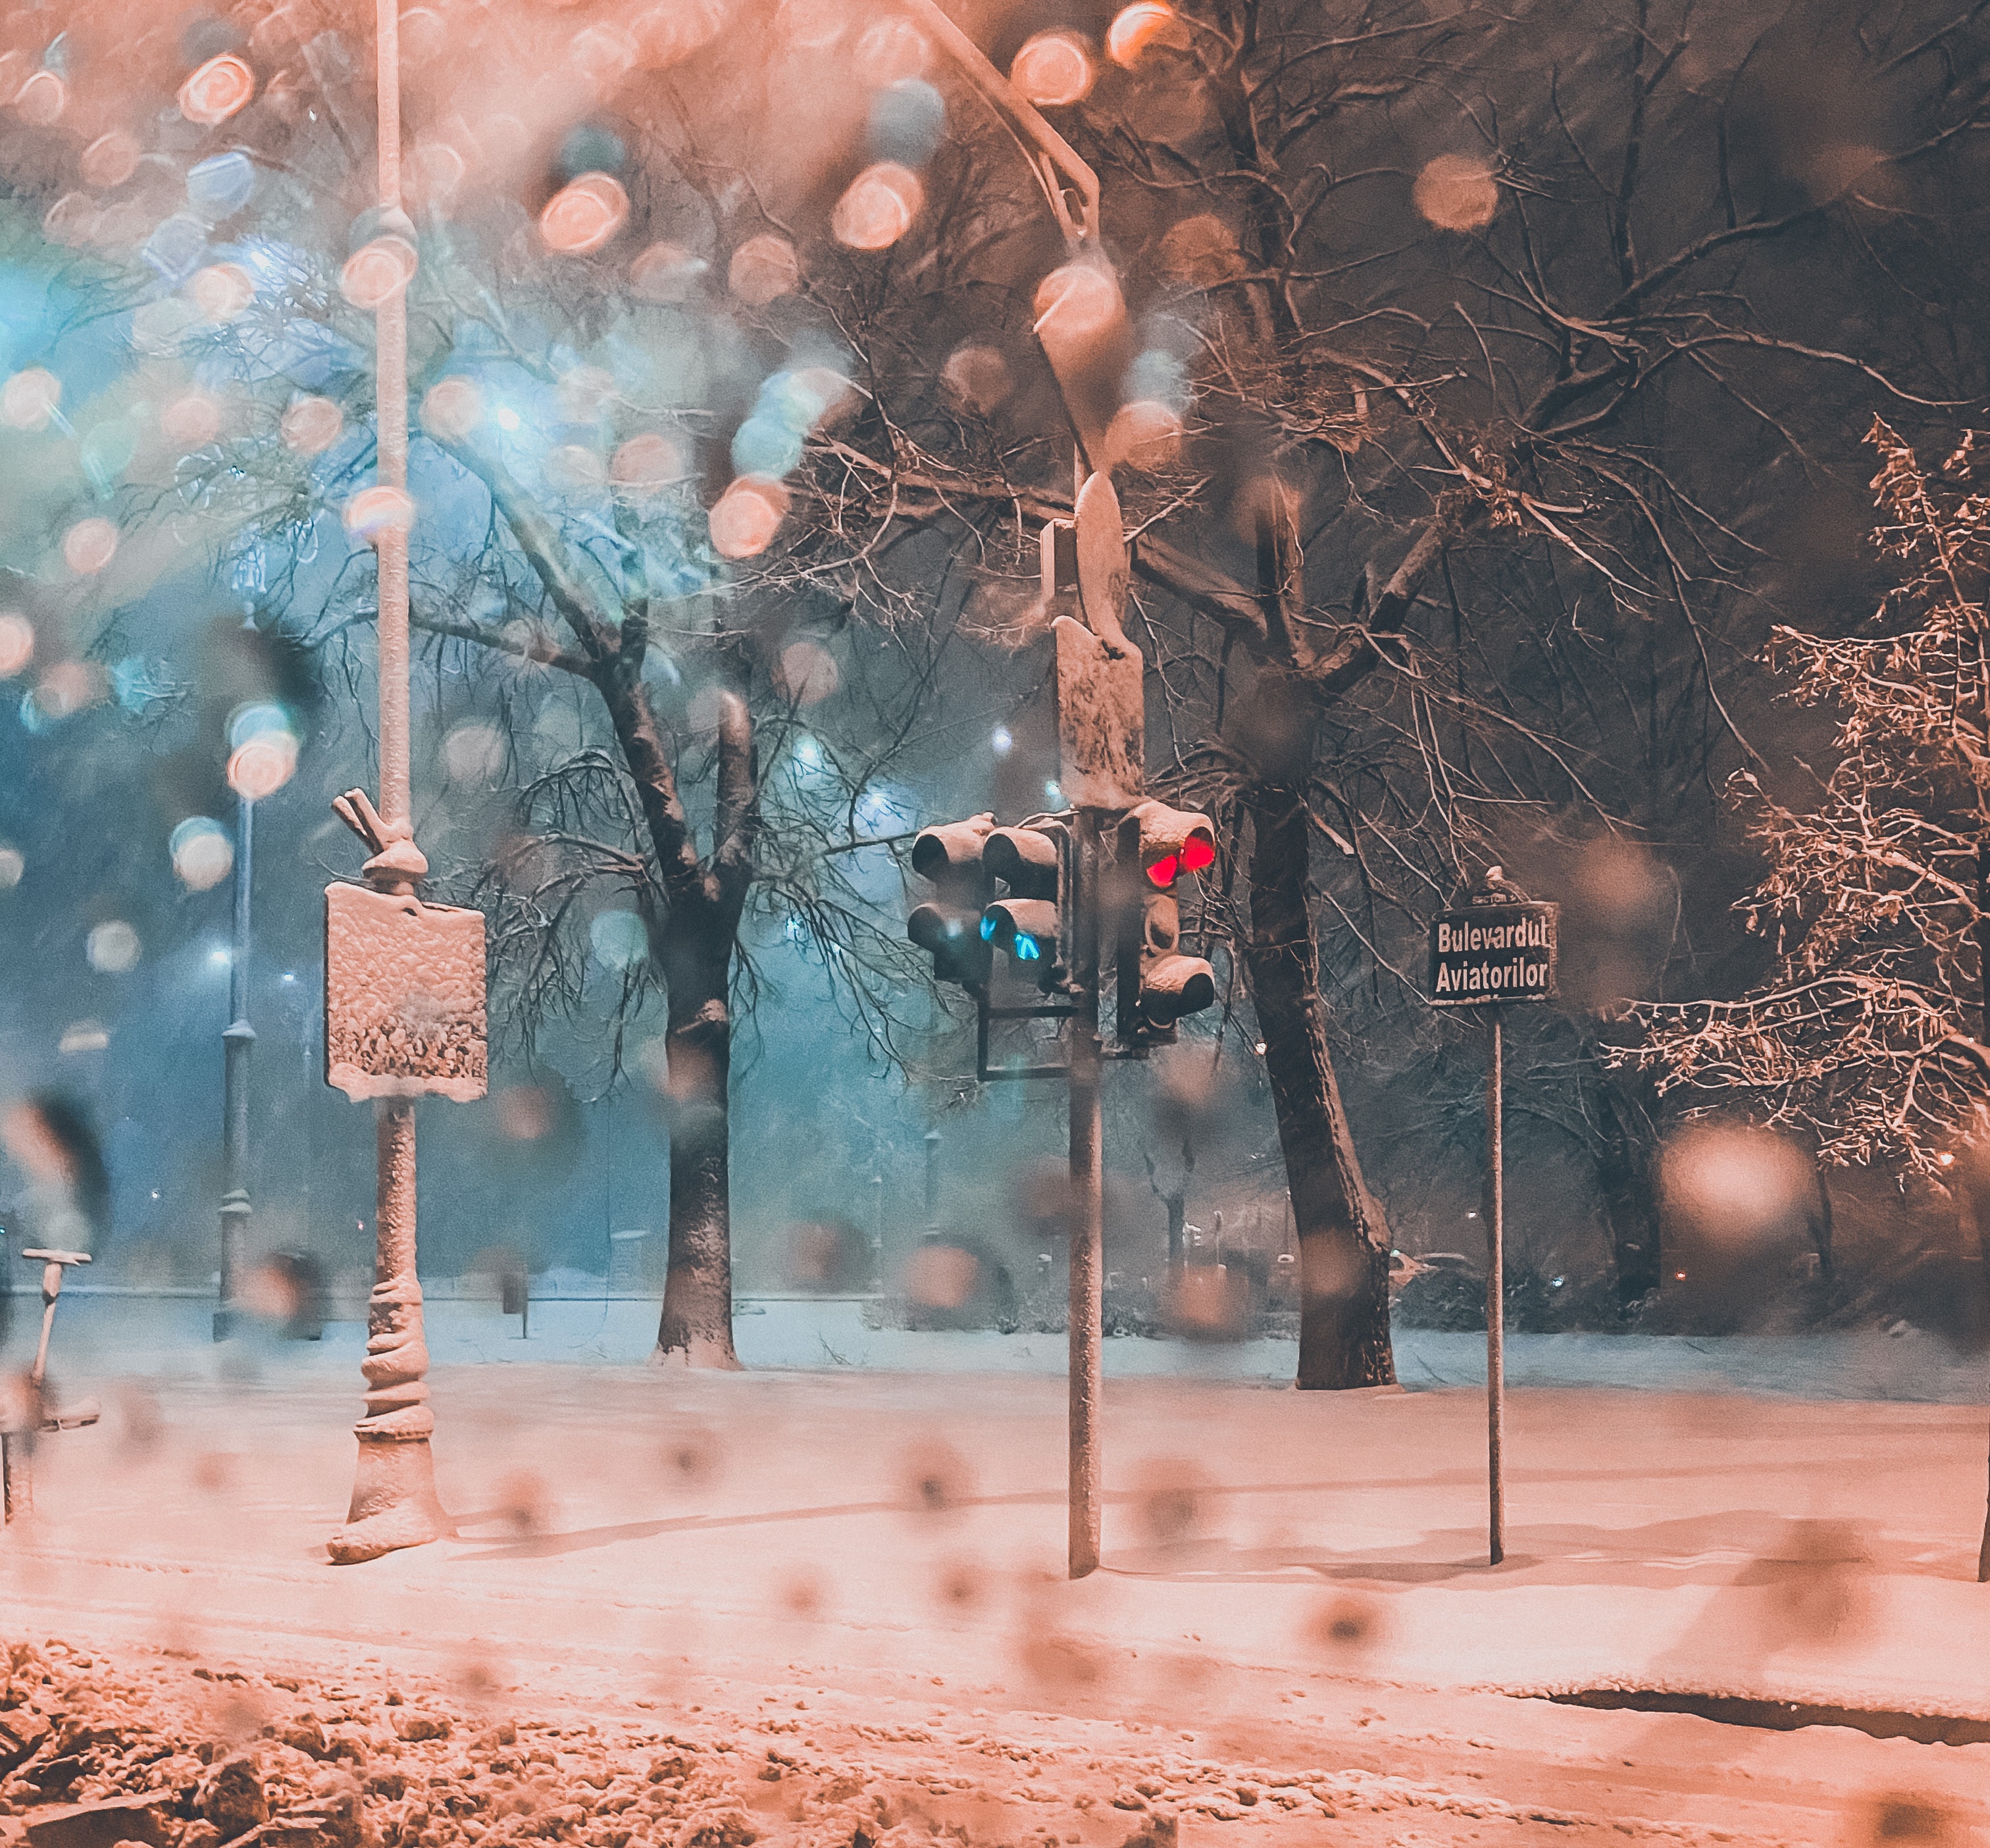 wallpapers traffic light, winter, snow, miscellanea, miscellaneous, street, snowstorm